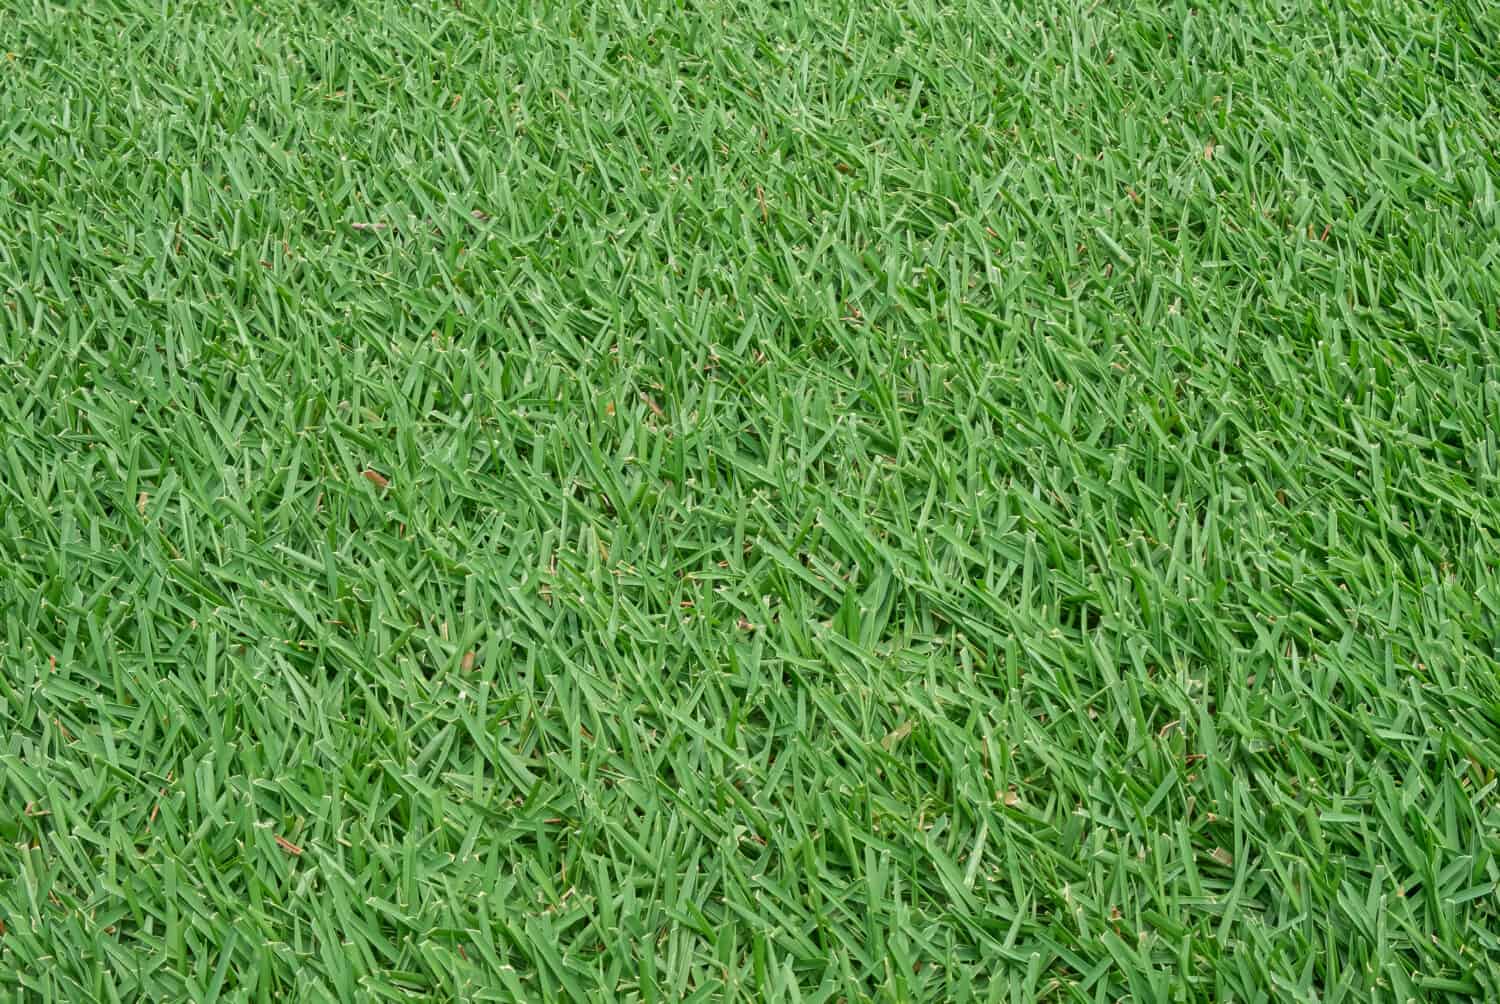 Green grass background texture. Green lawn texture background. top view. Zoysia grass